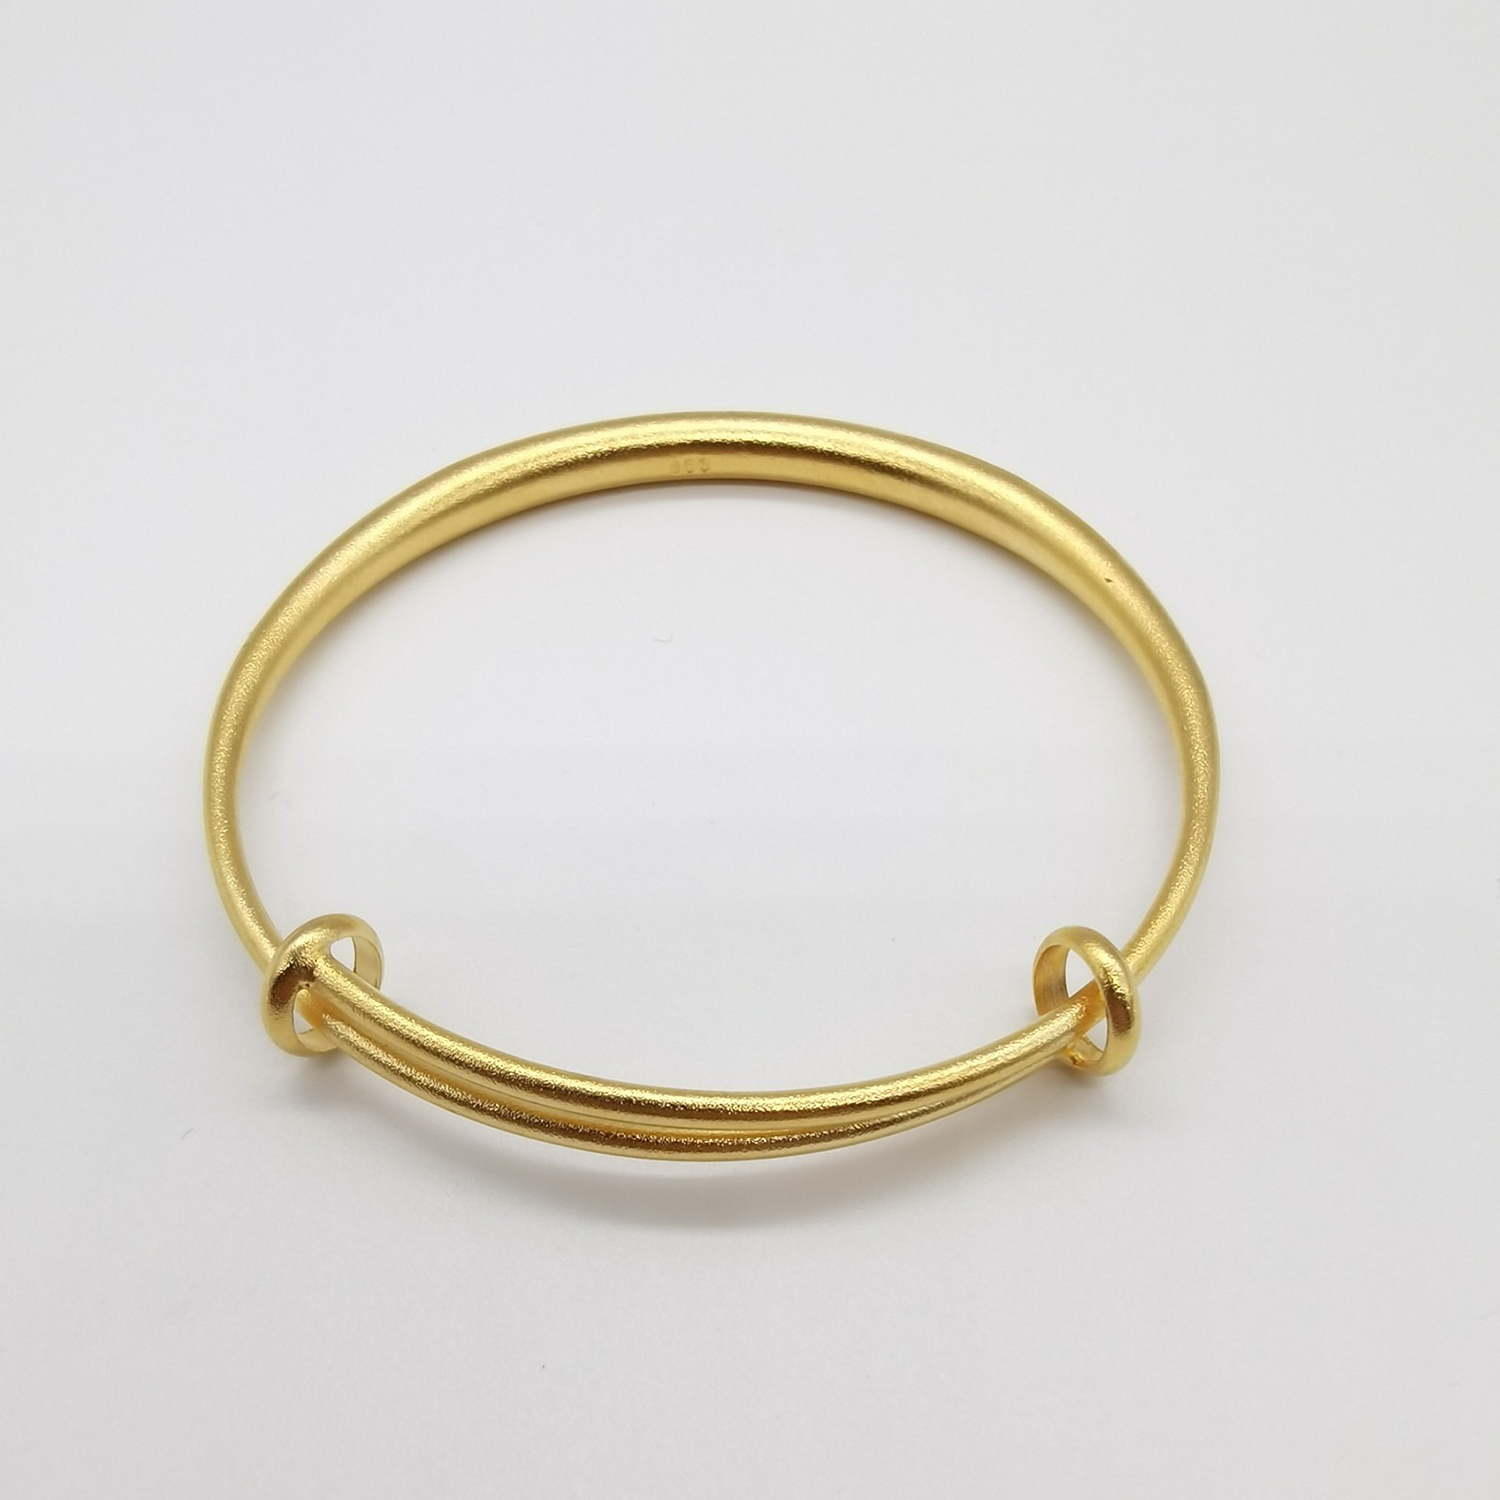 Alluvial gold ancient method vacuum electroplating 24K gold plain ring push-pull bracelet